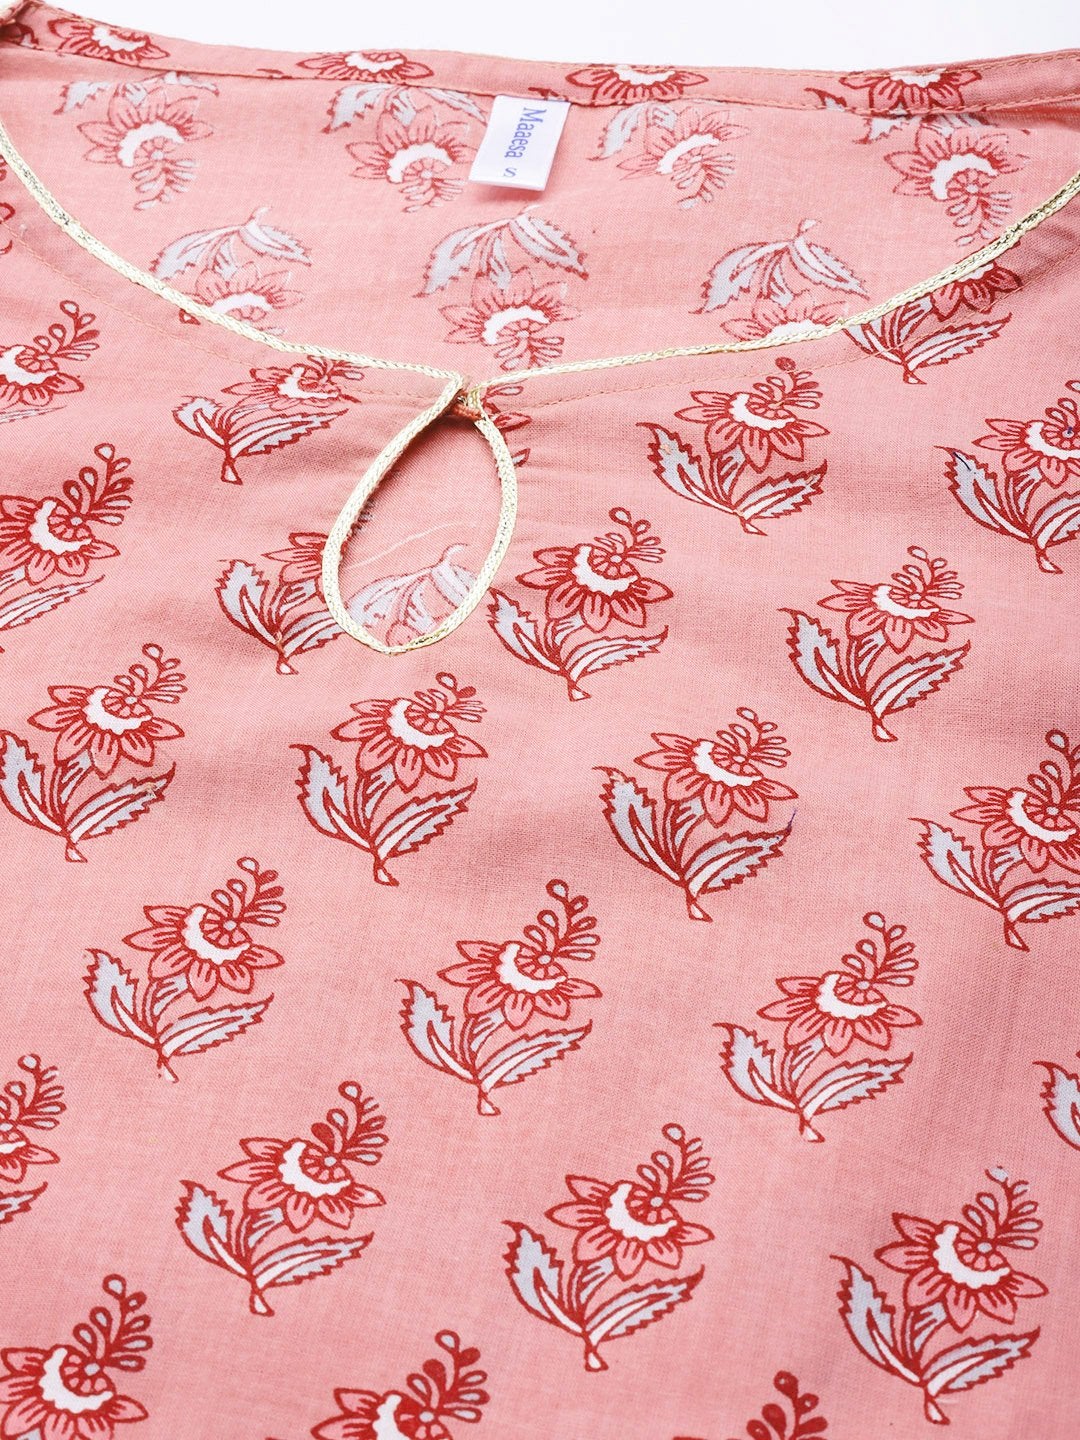 Women's Pink Printed Kurta With Dupatta & Trouser - Maaesa